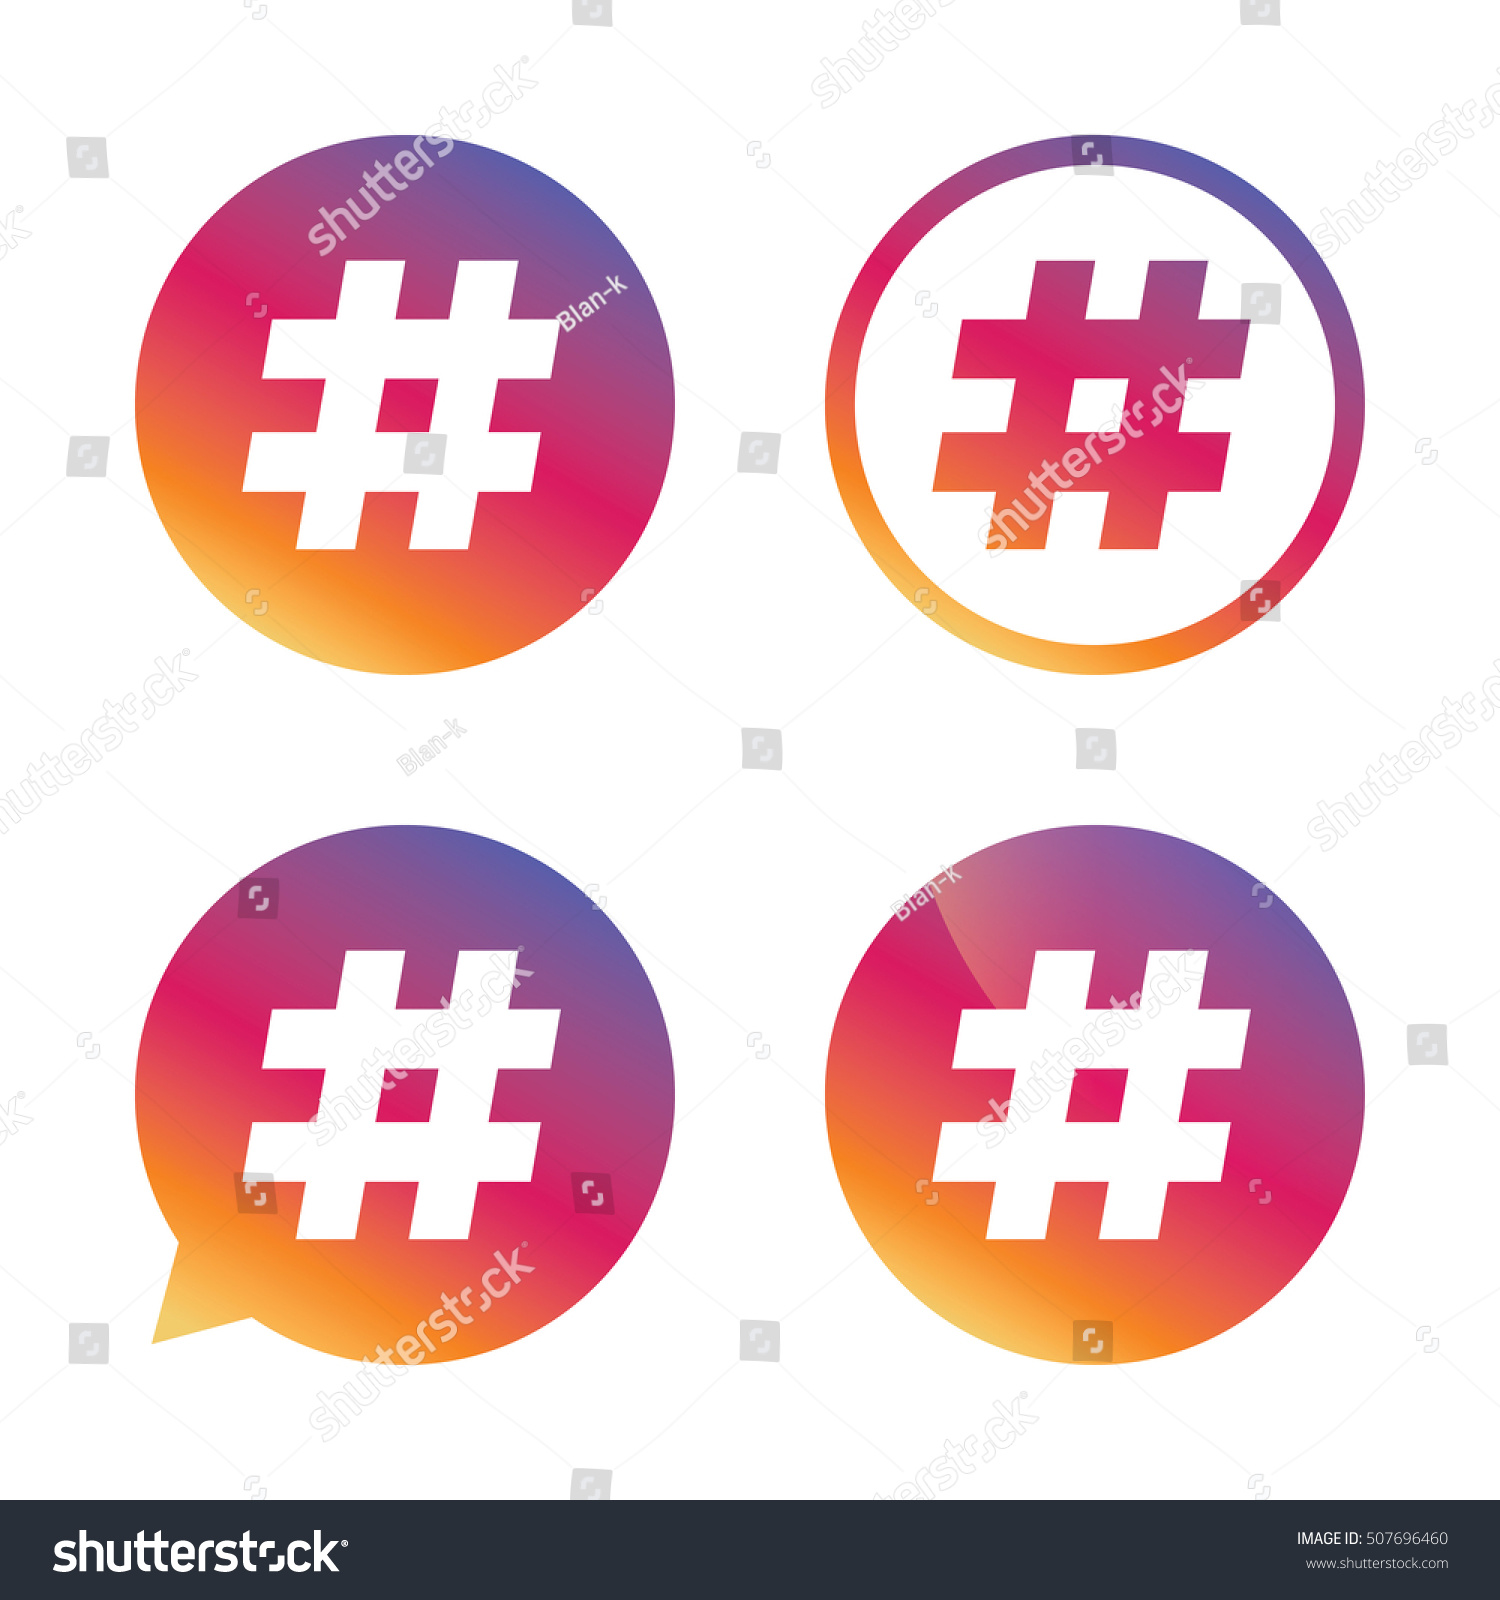 Hashtag Sign Icon Social Media Symbol Stock Vector Royalty Free 507696460 Shutterstock